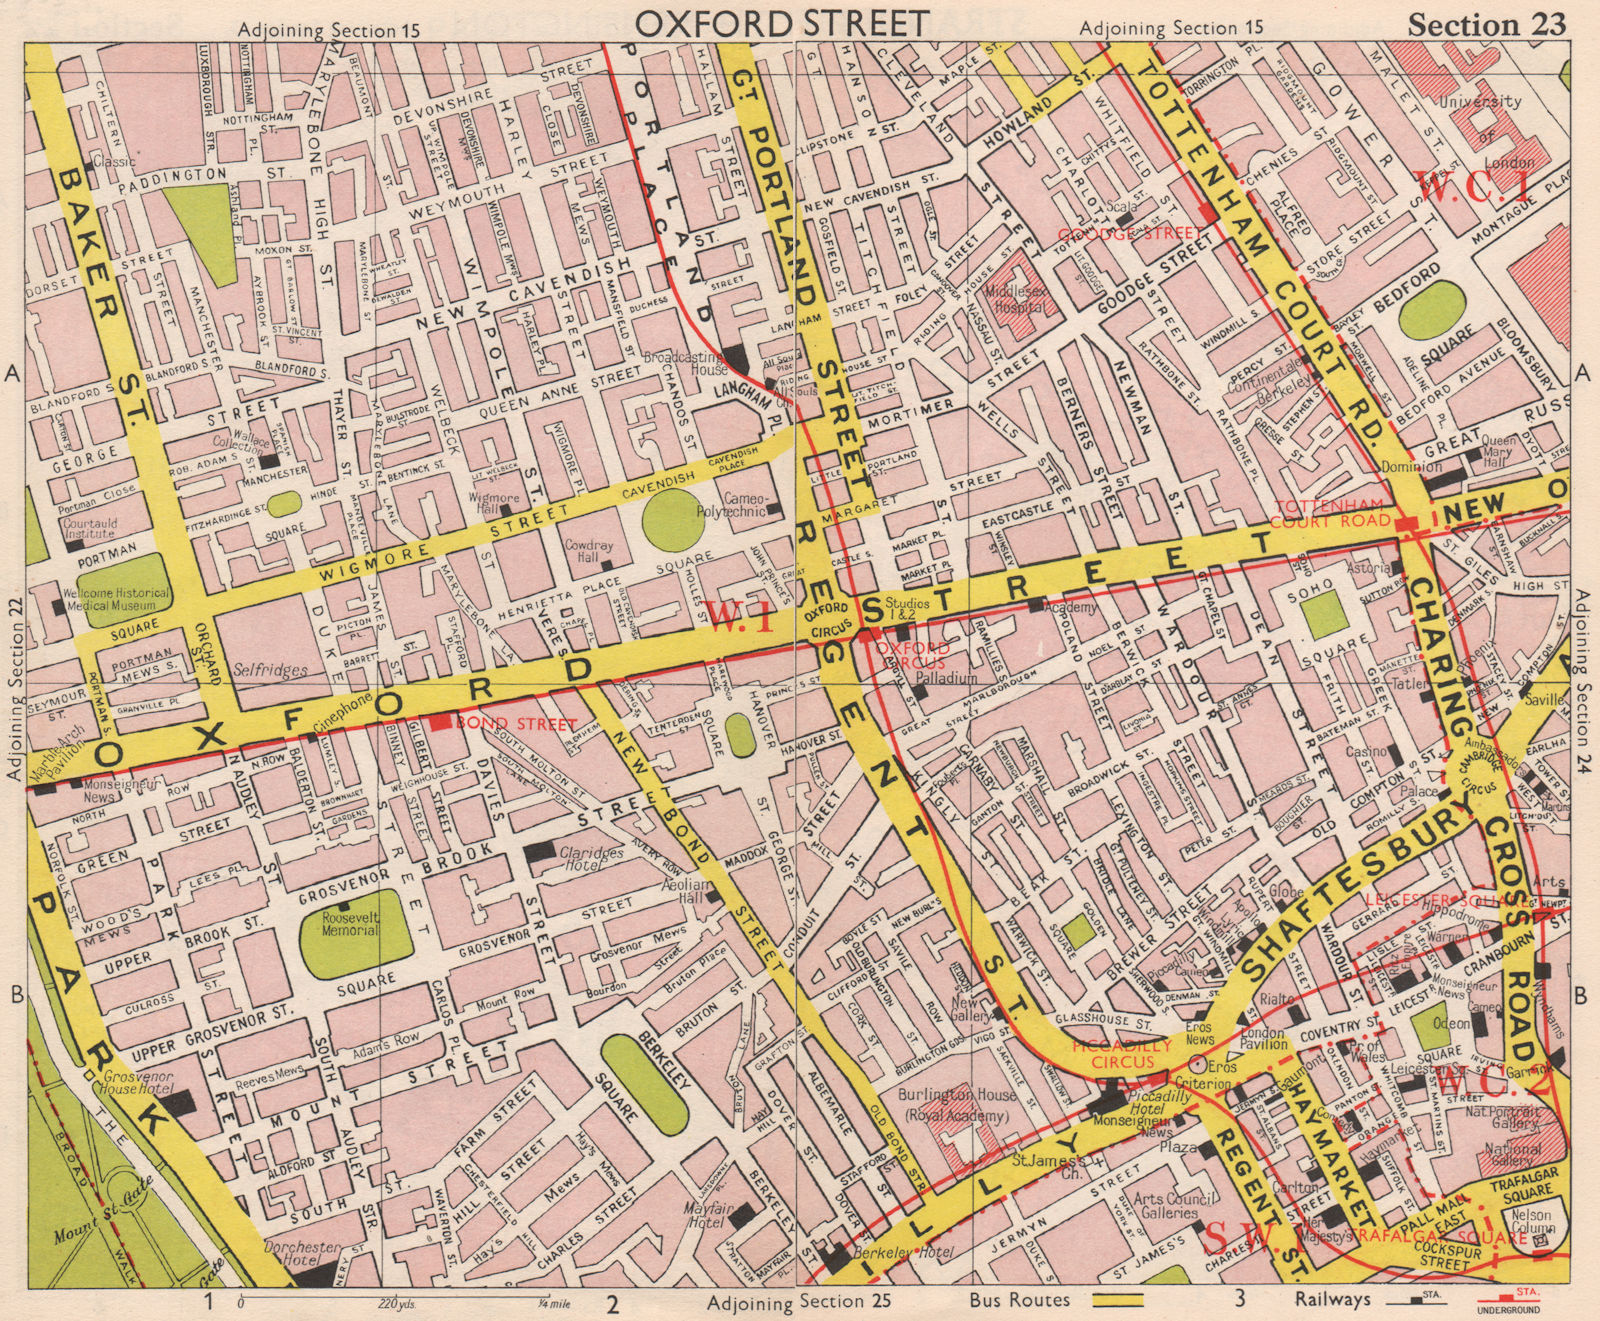 LONDON W1 Marylebone Mayfair Soho Fitzrovia West End Bloomsbury. BACON 1959 map